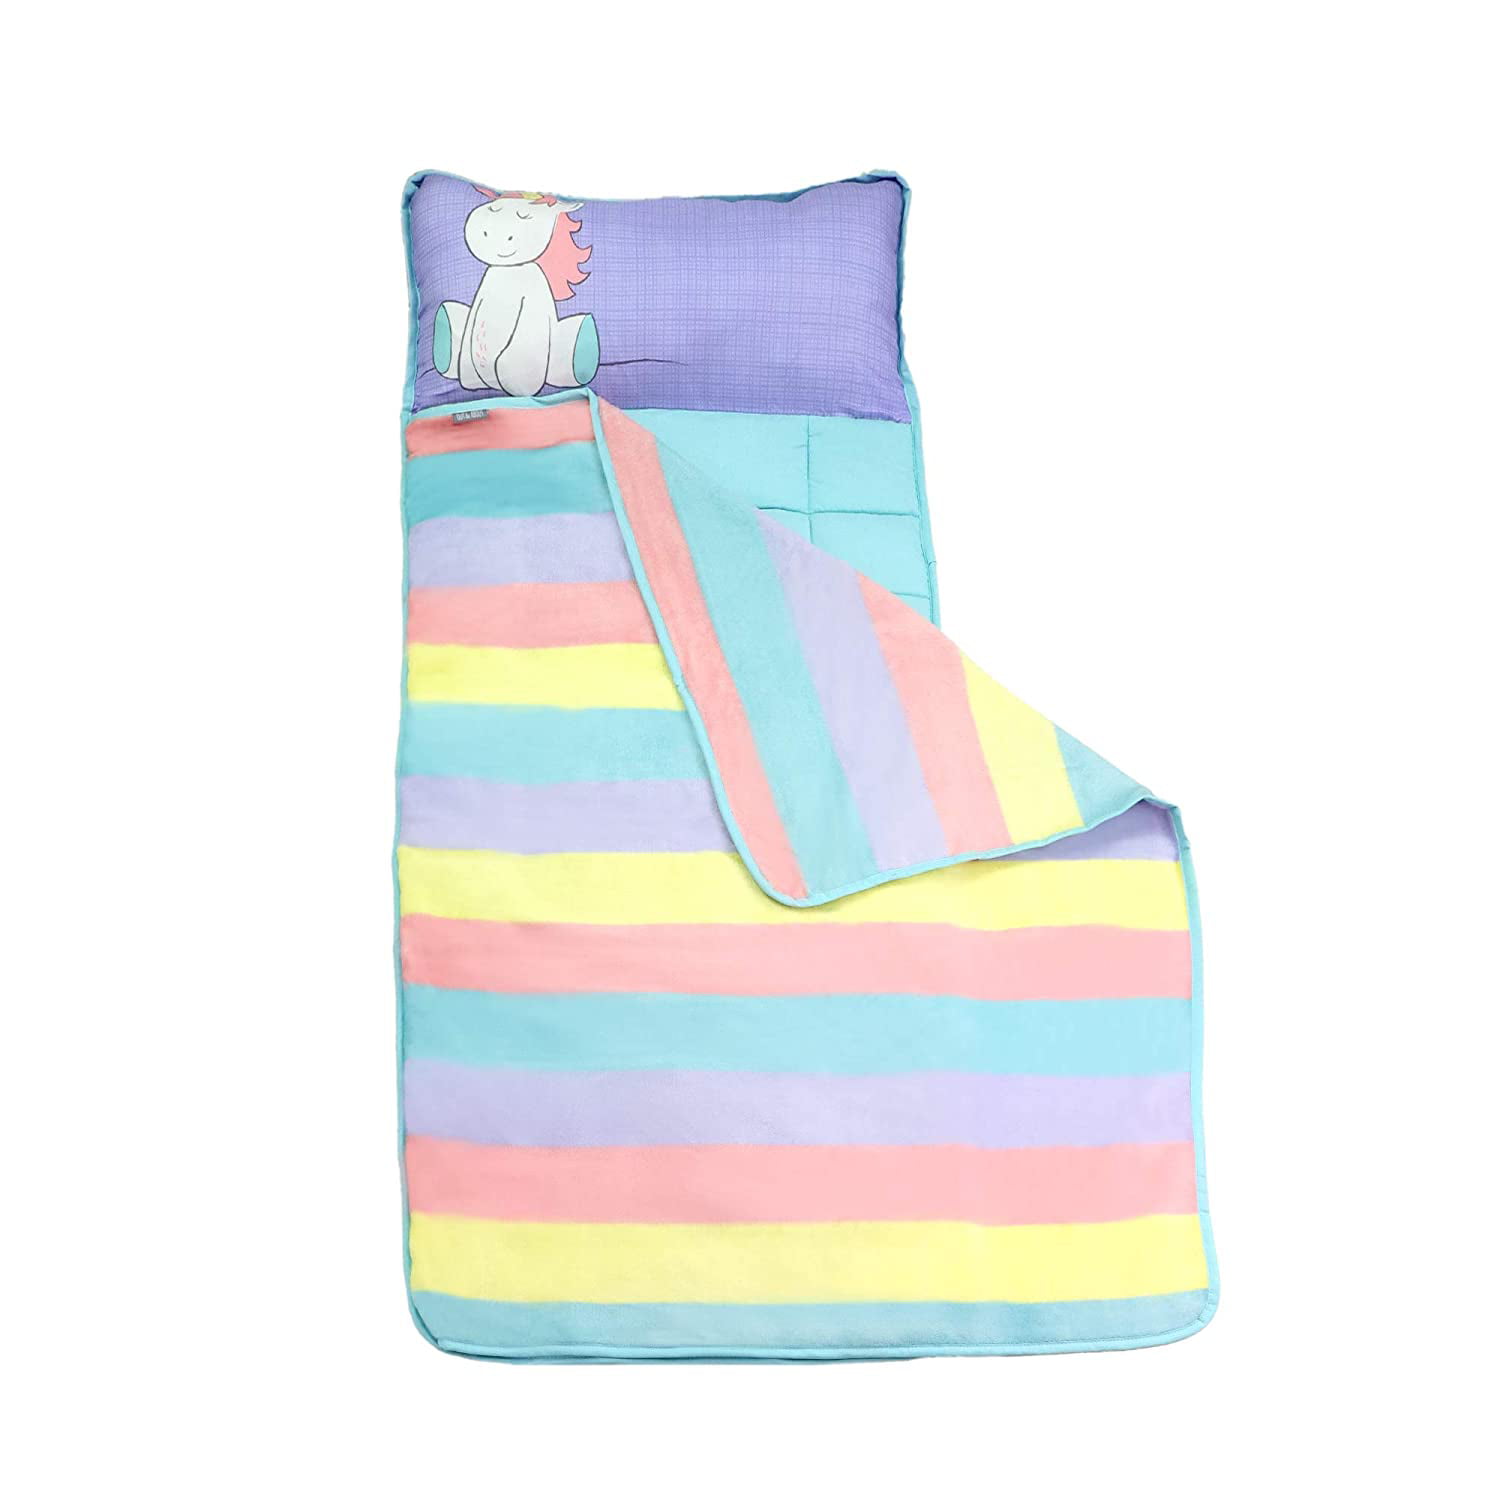 Blanket Toddler Nap Mats for Preschool Kinder Daycare Pillow for Boys or Girls Foldable Comfy Cover Unicorn 